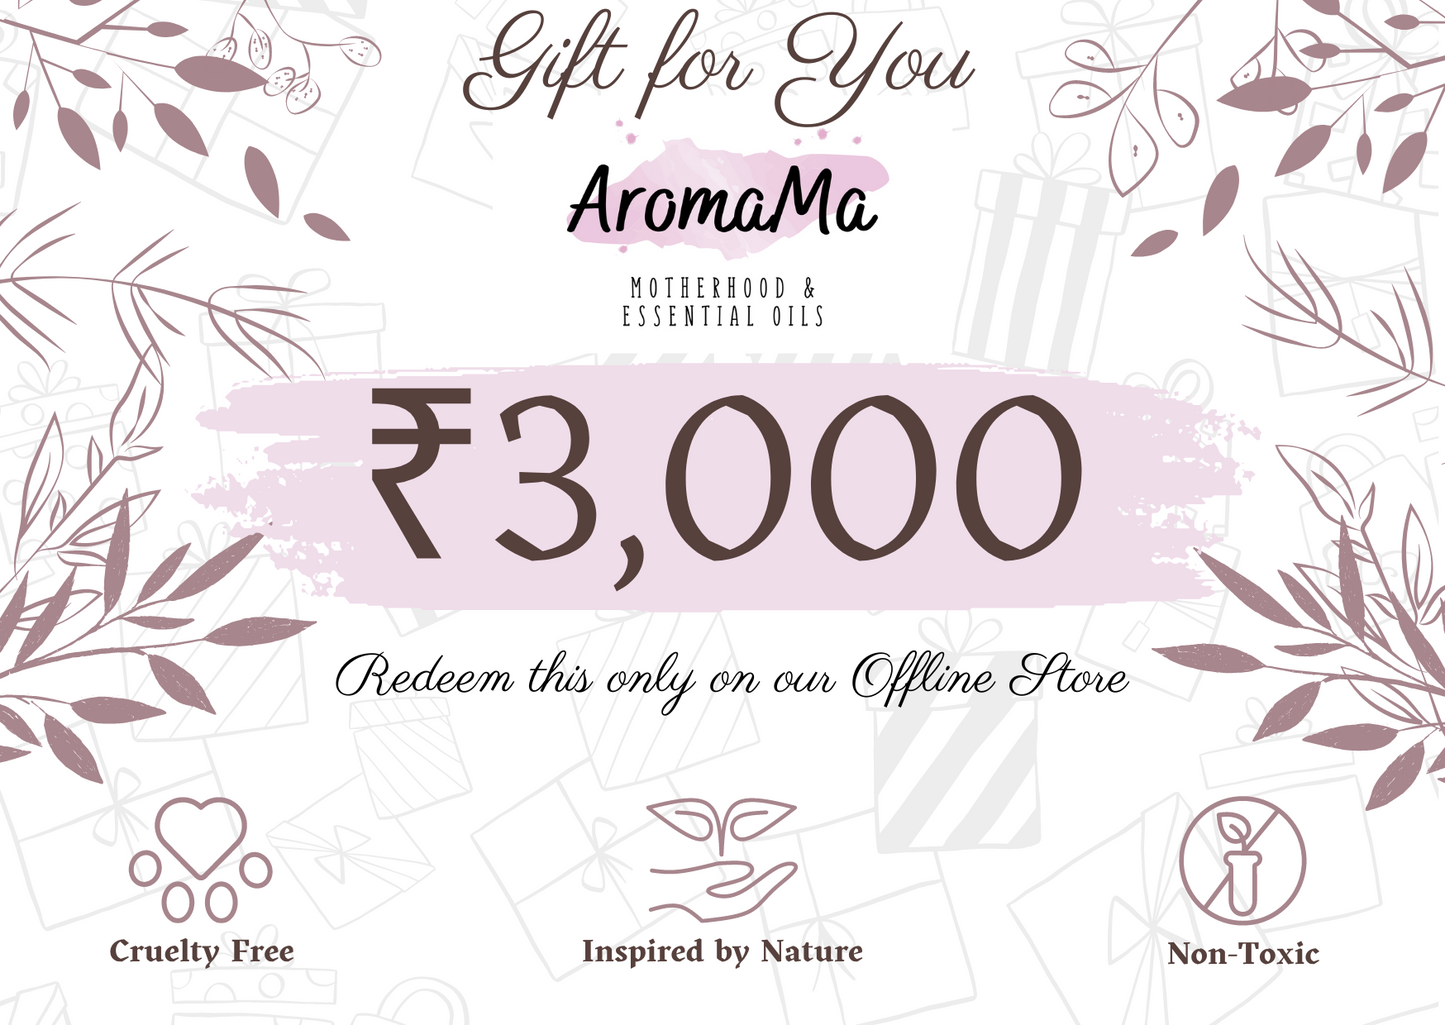 AromaMa E - Gift Card